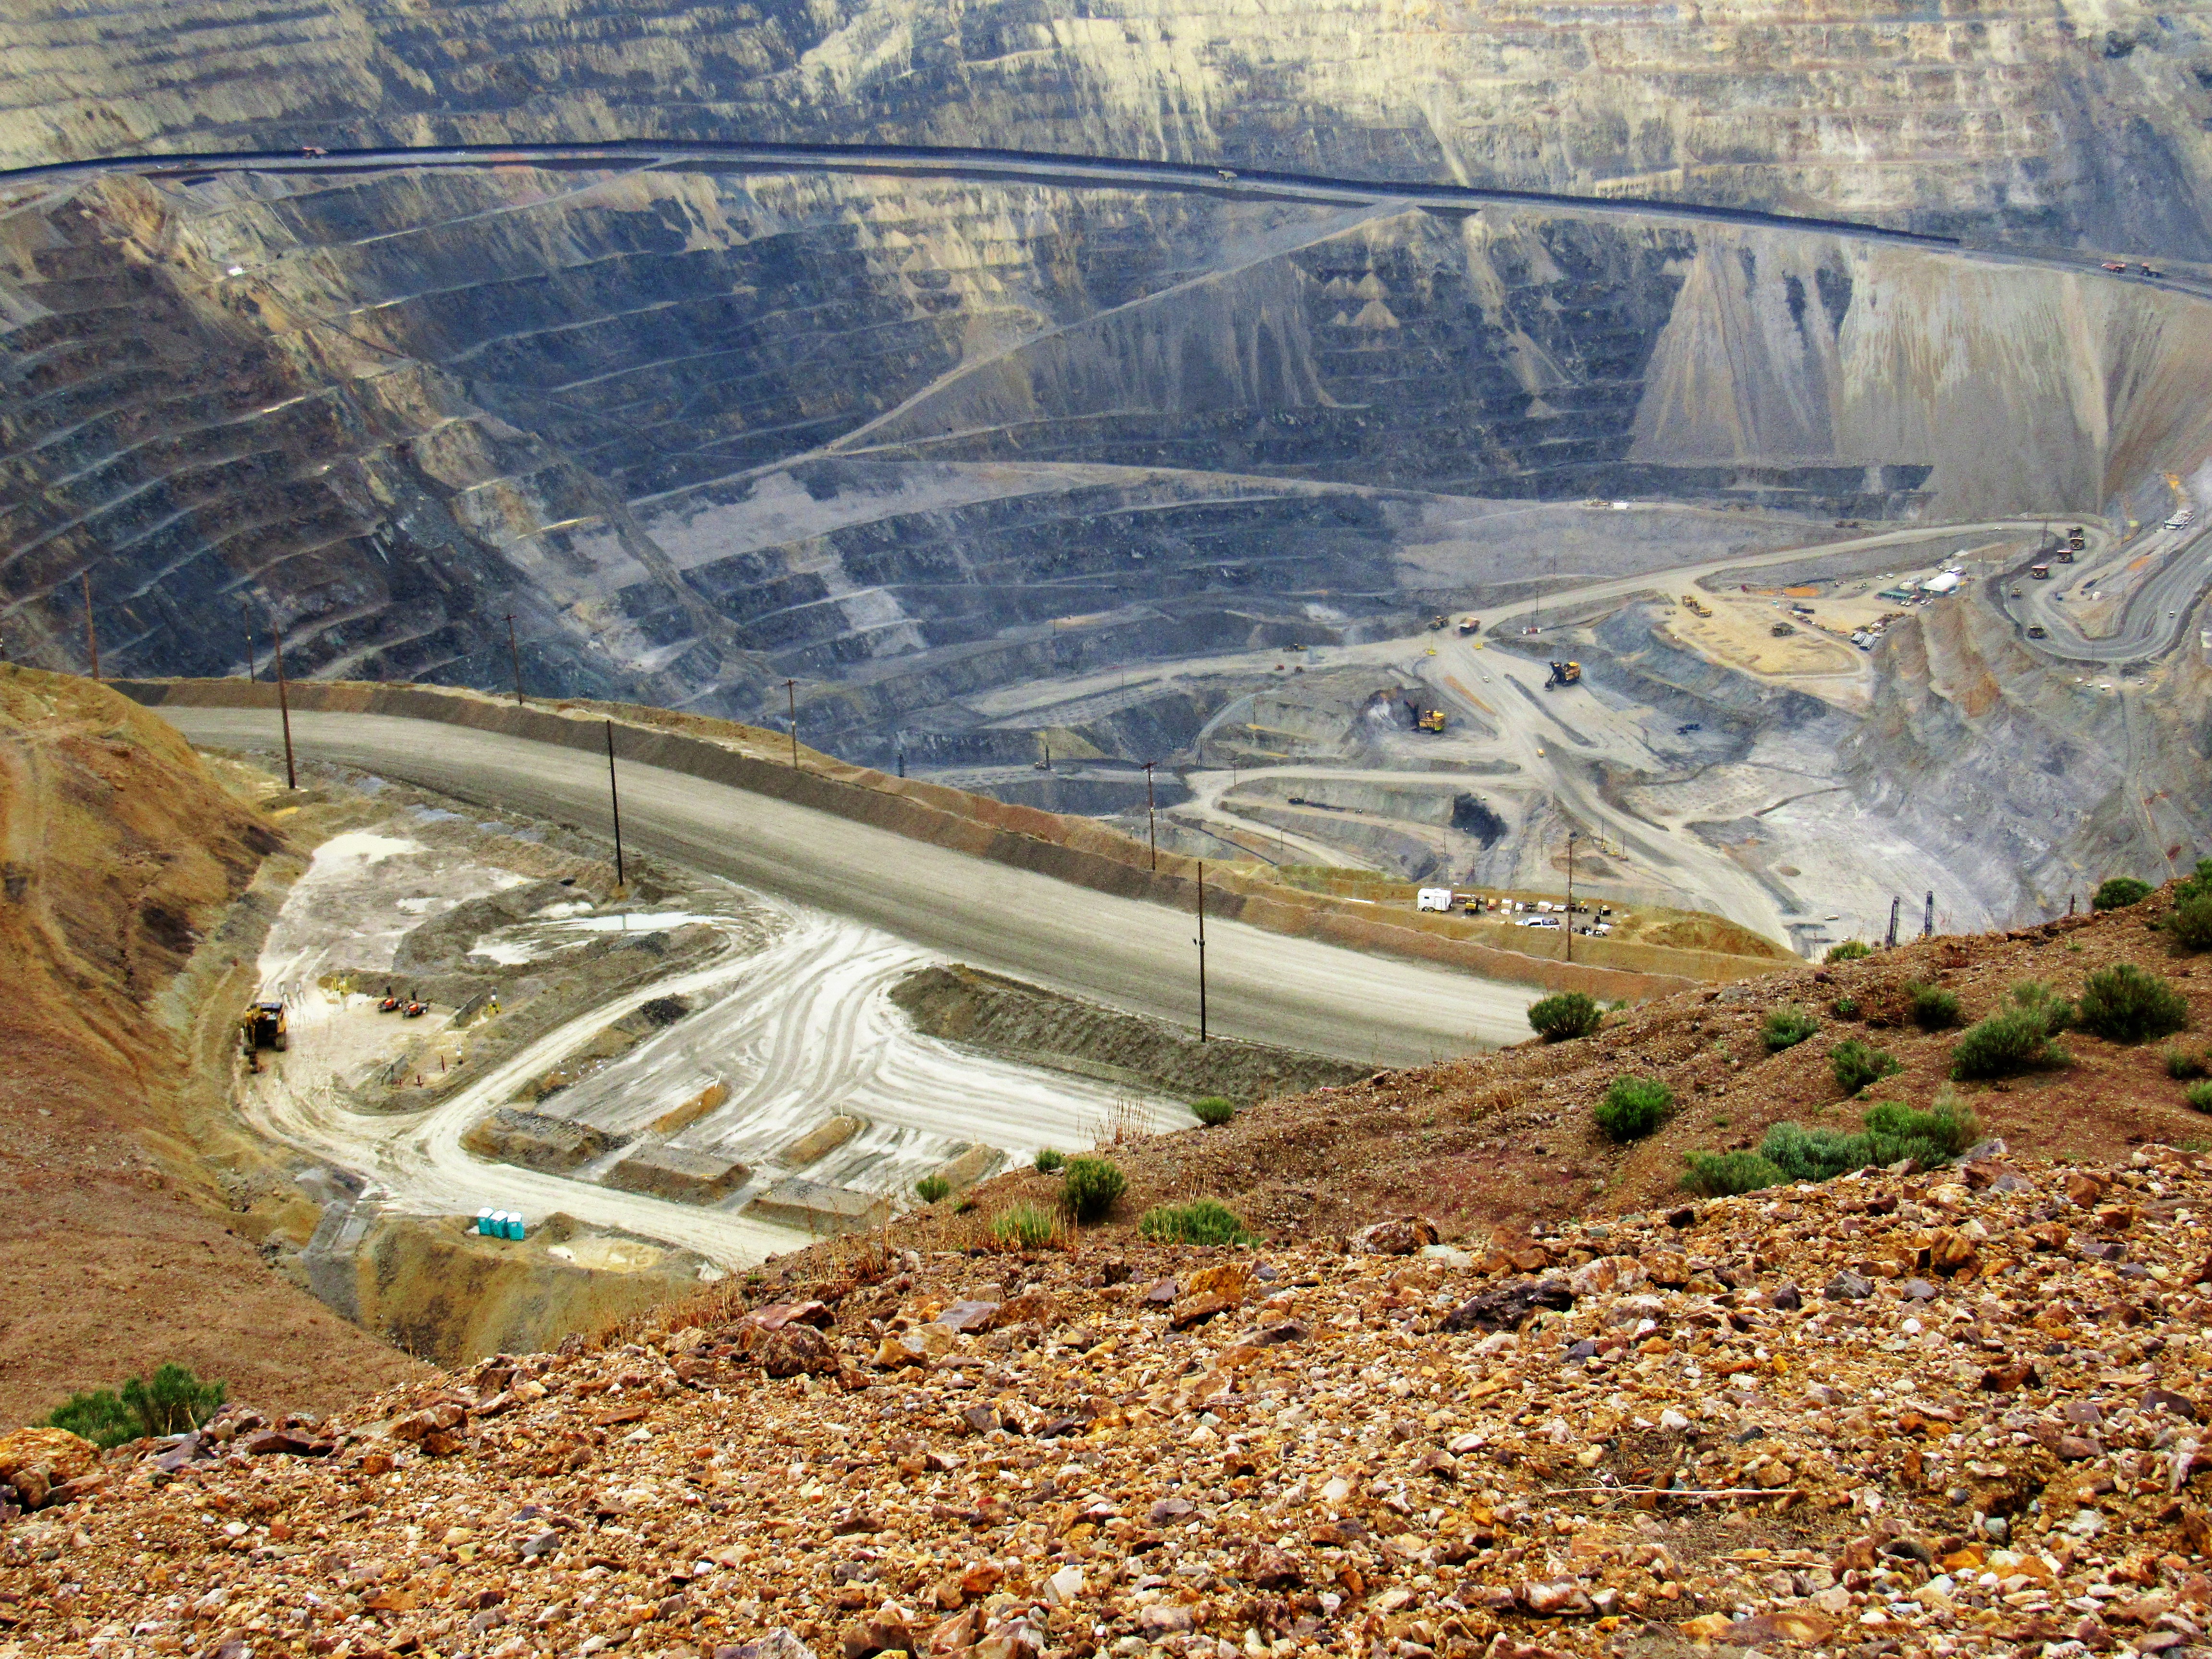 Bingham Canyon copper mine in Utah